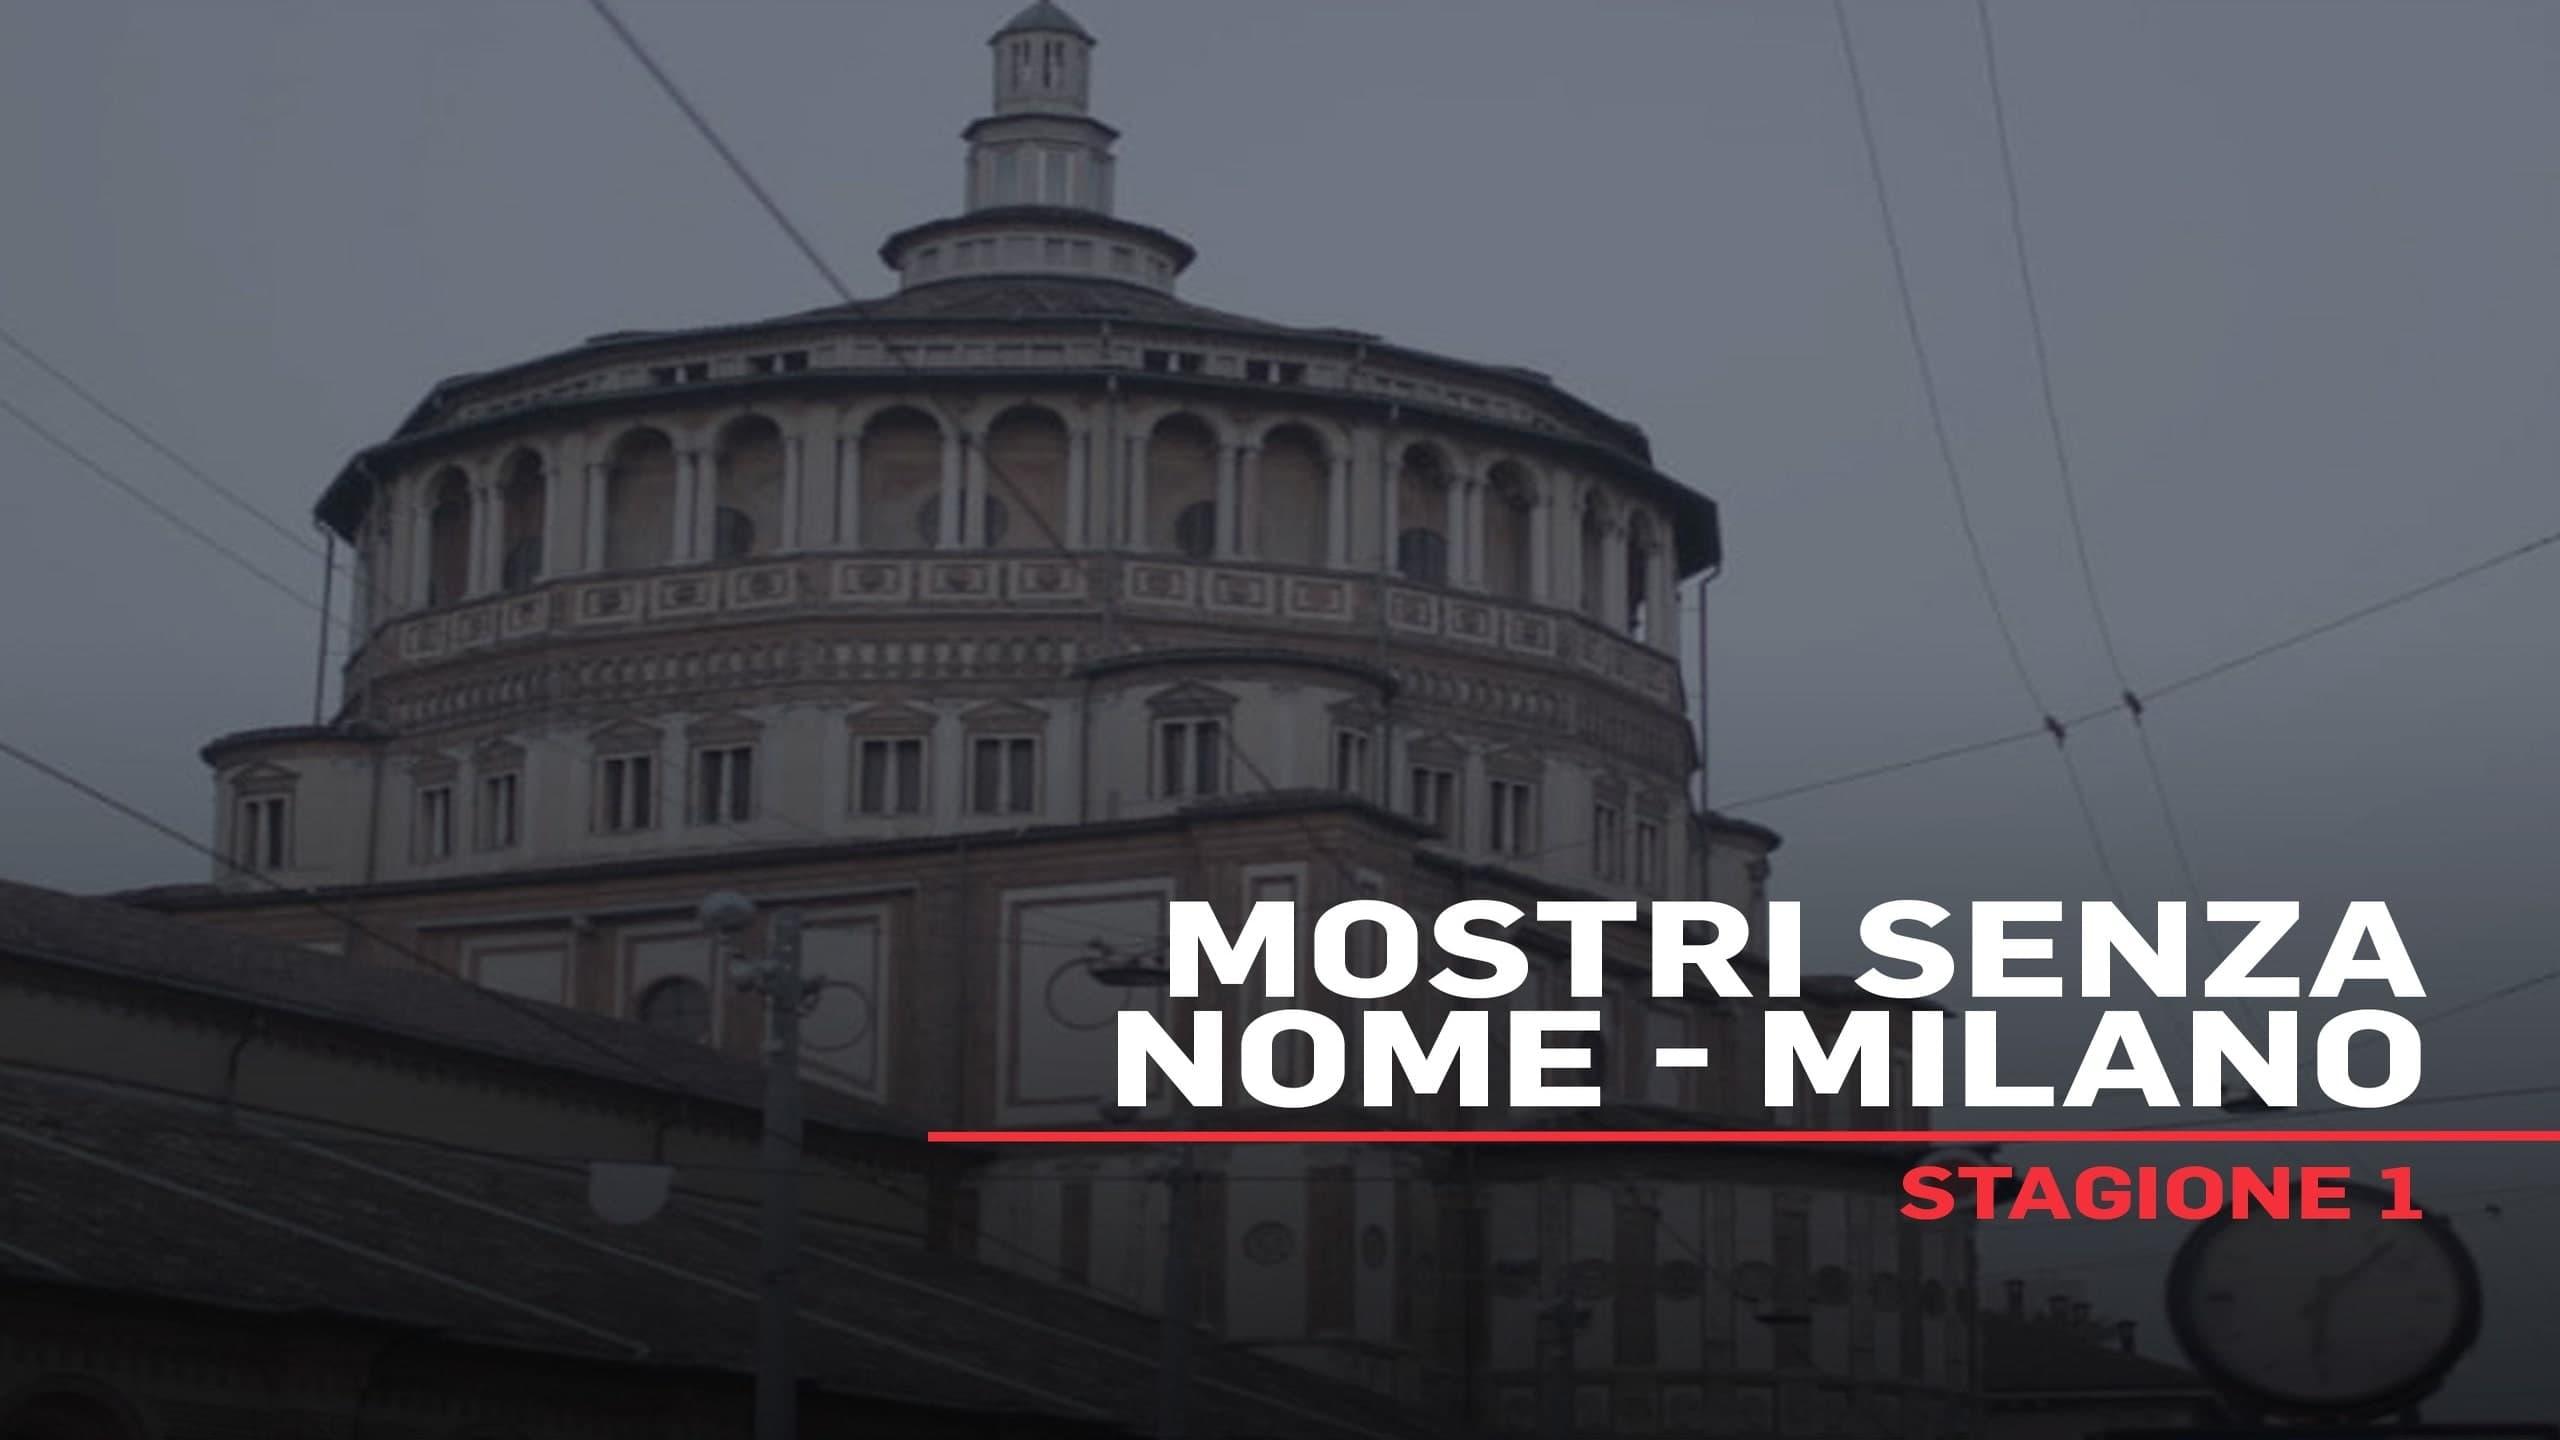 Mostri senza nome - Milano backdrop